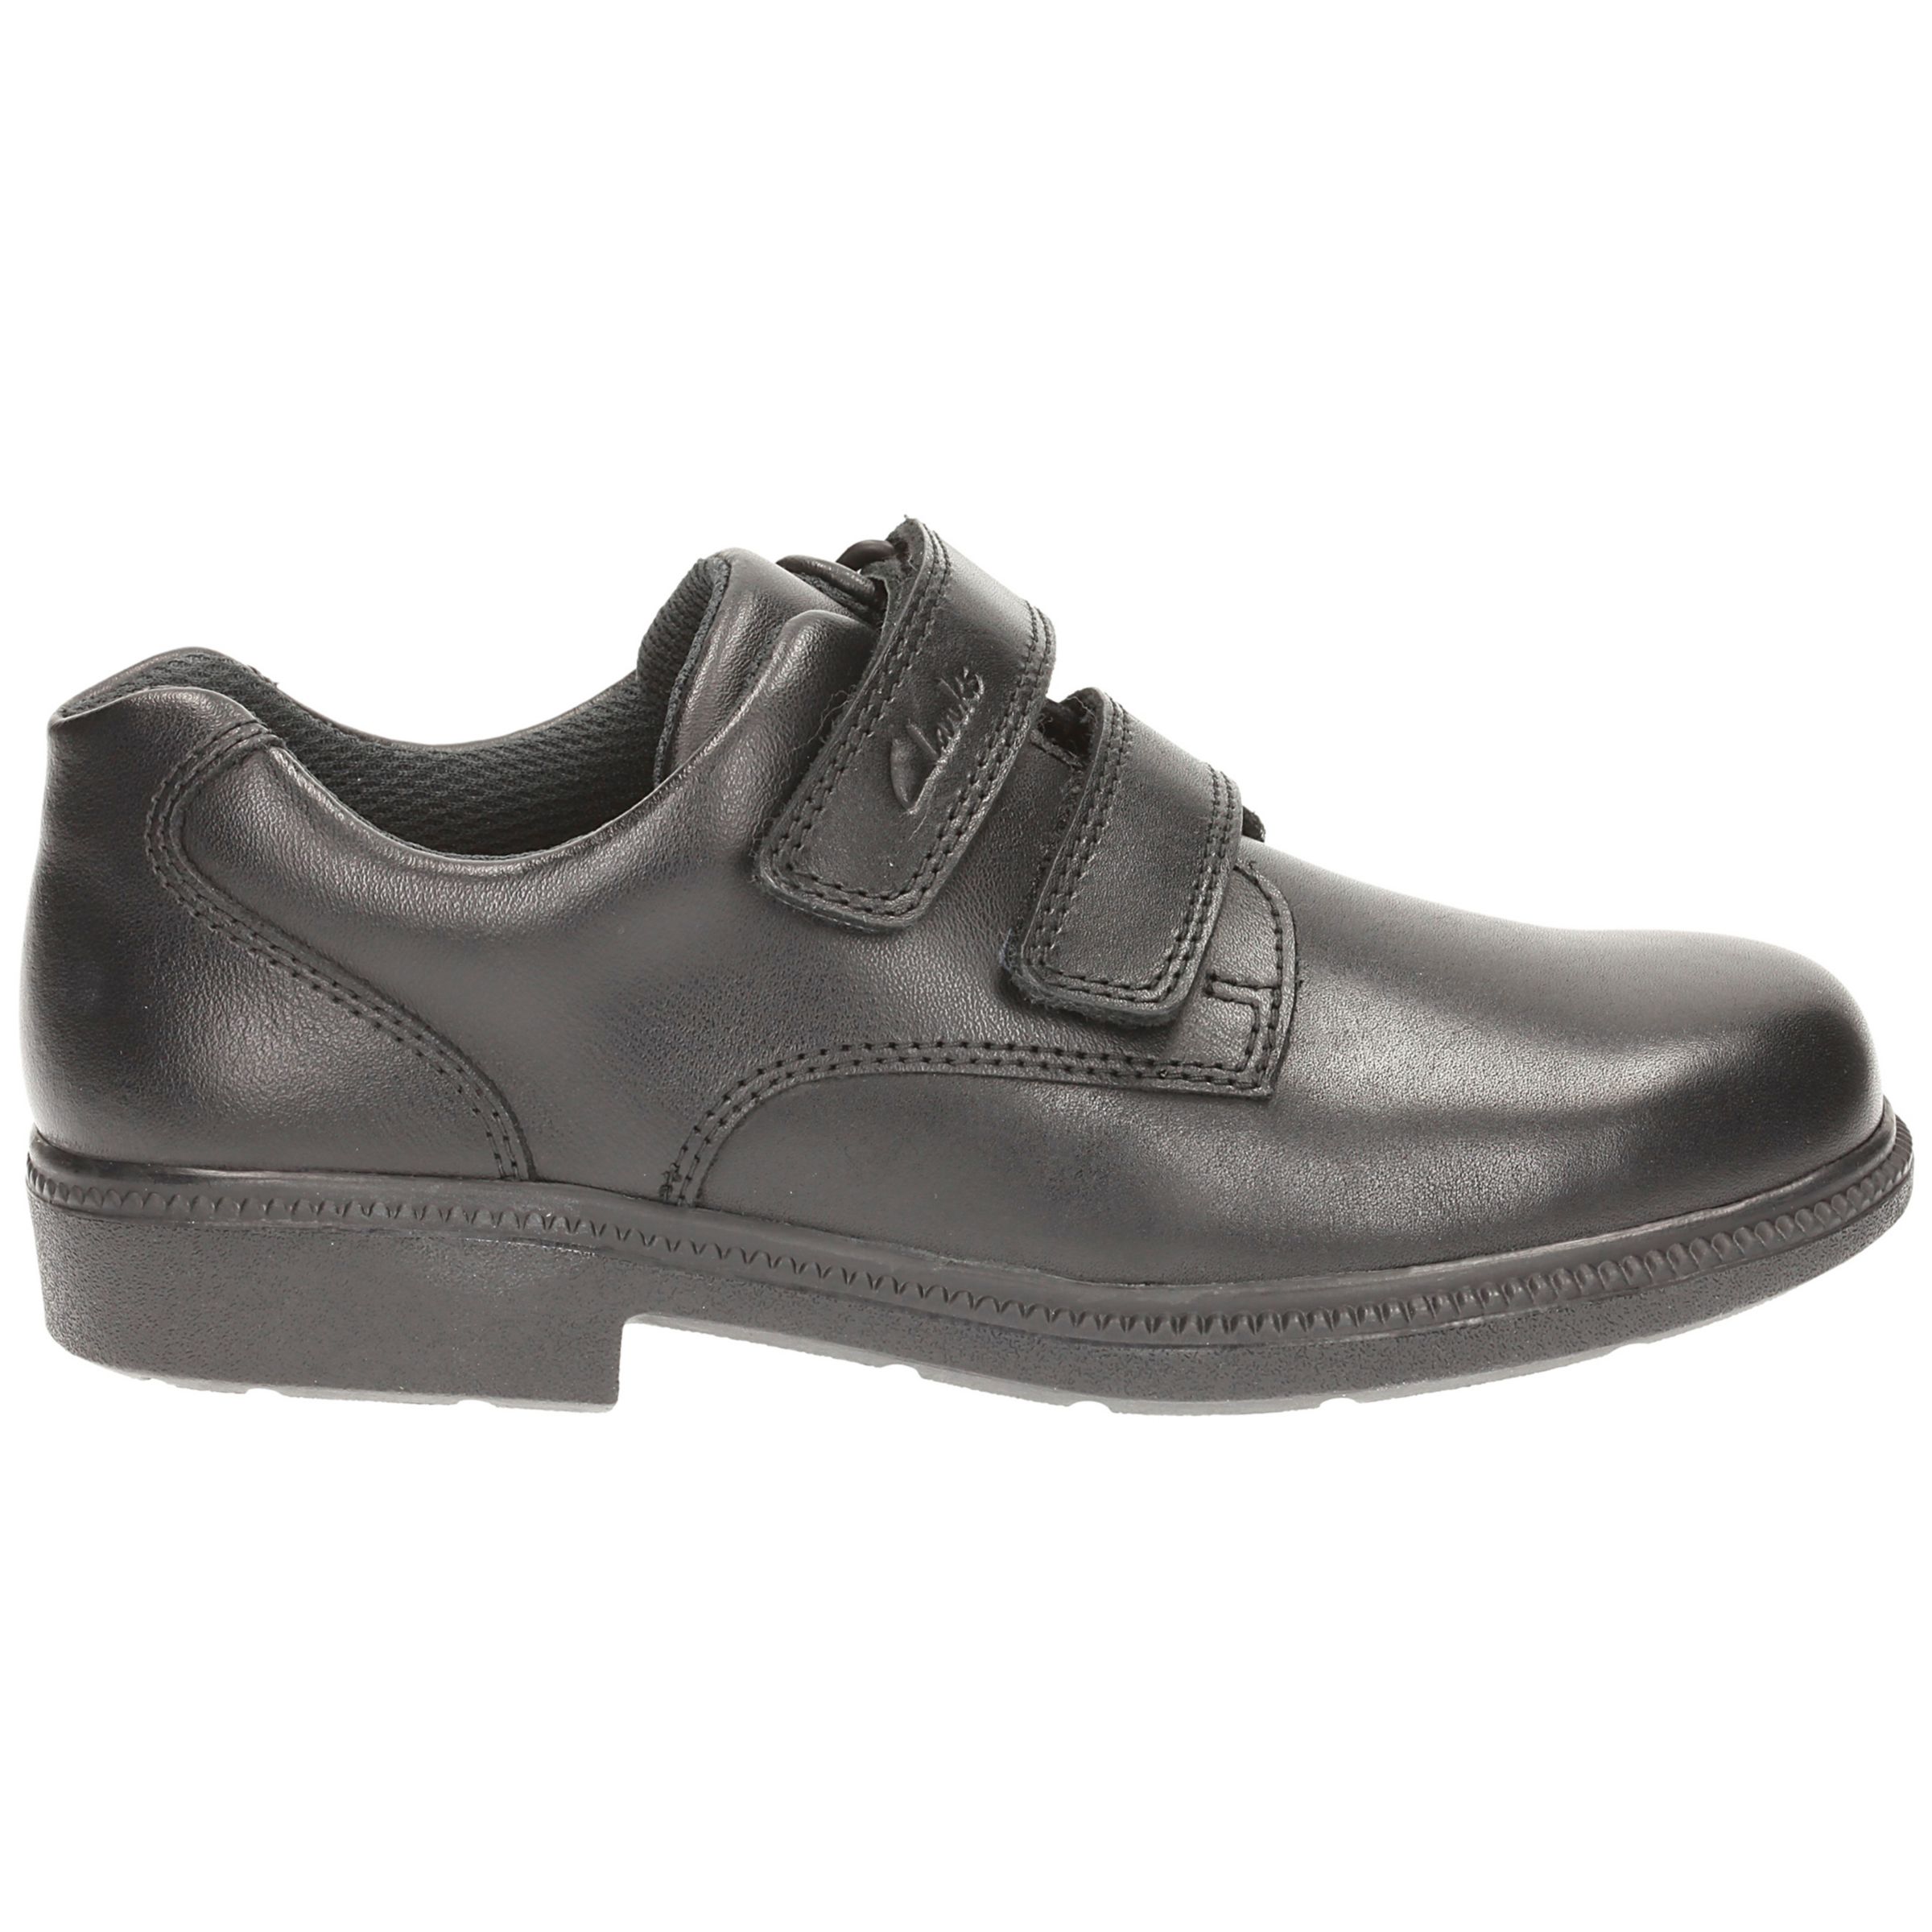 Deaton Gate Leather School Shoes, Black 